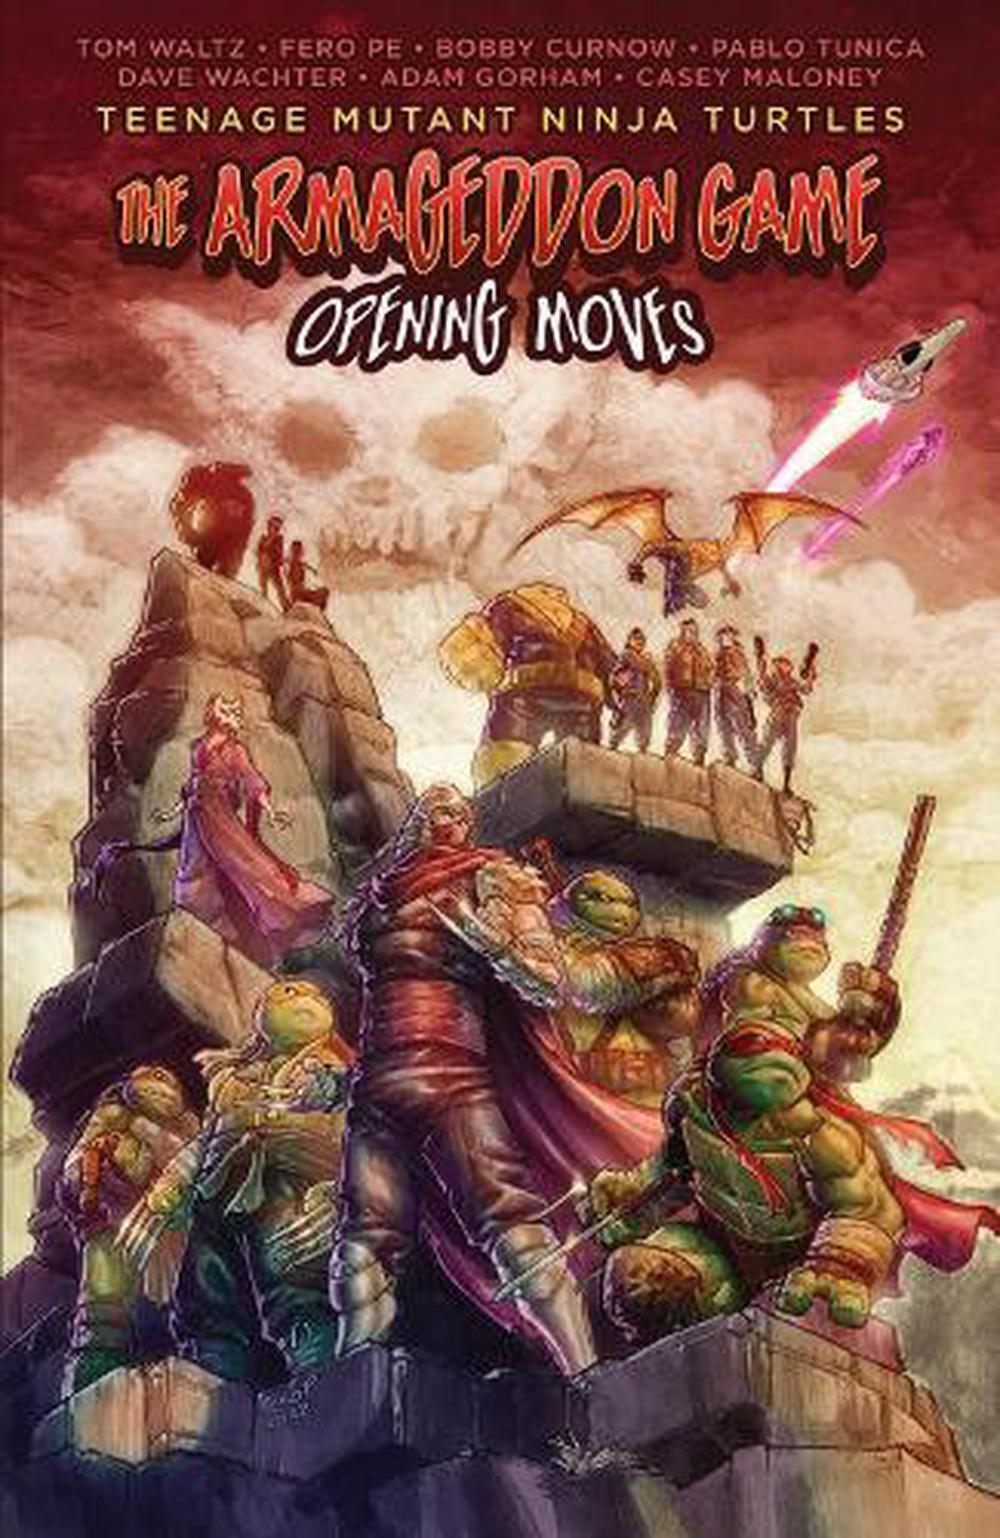 Teenage Mutant Ninja Turtles: The Armageddon Game--Opening Moves by Tom Waltz (E